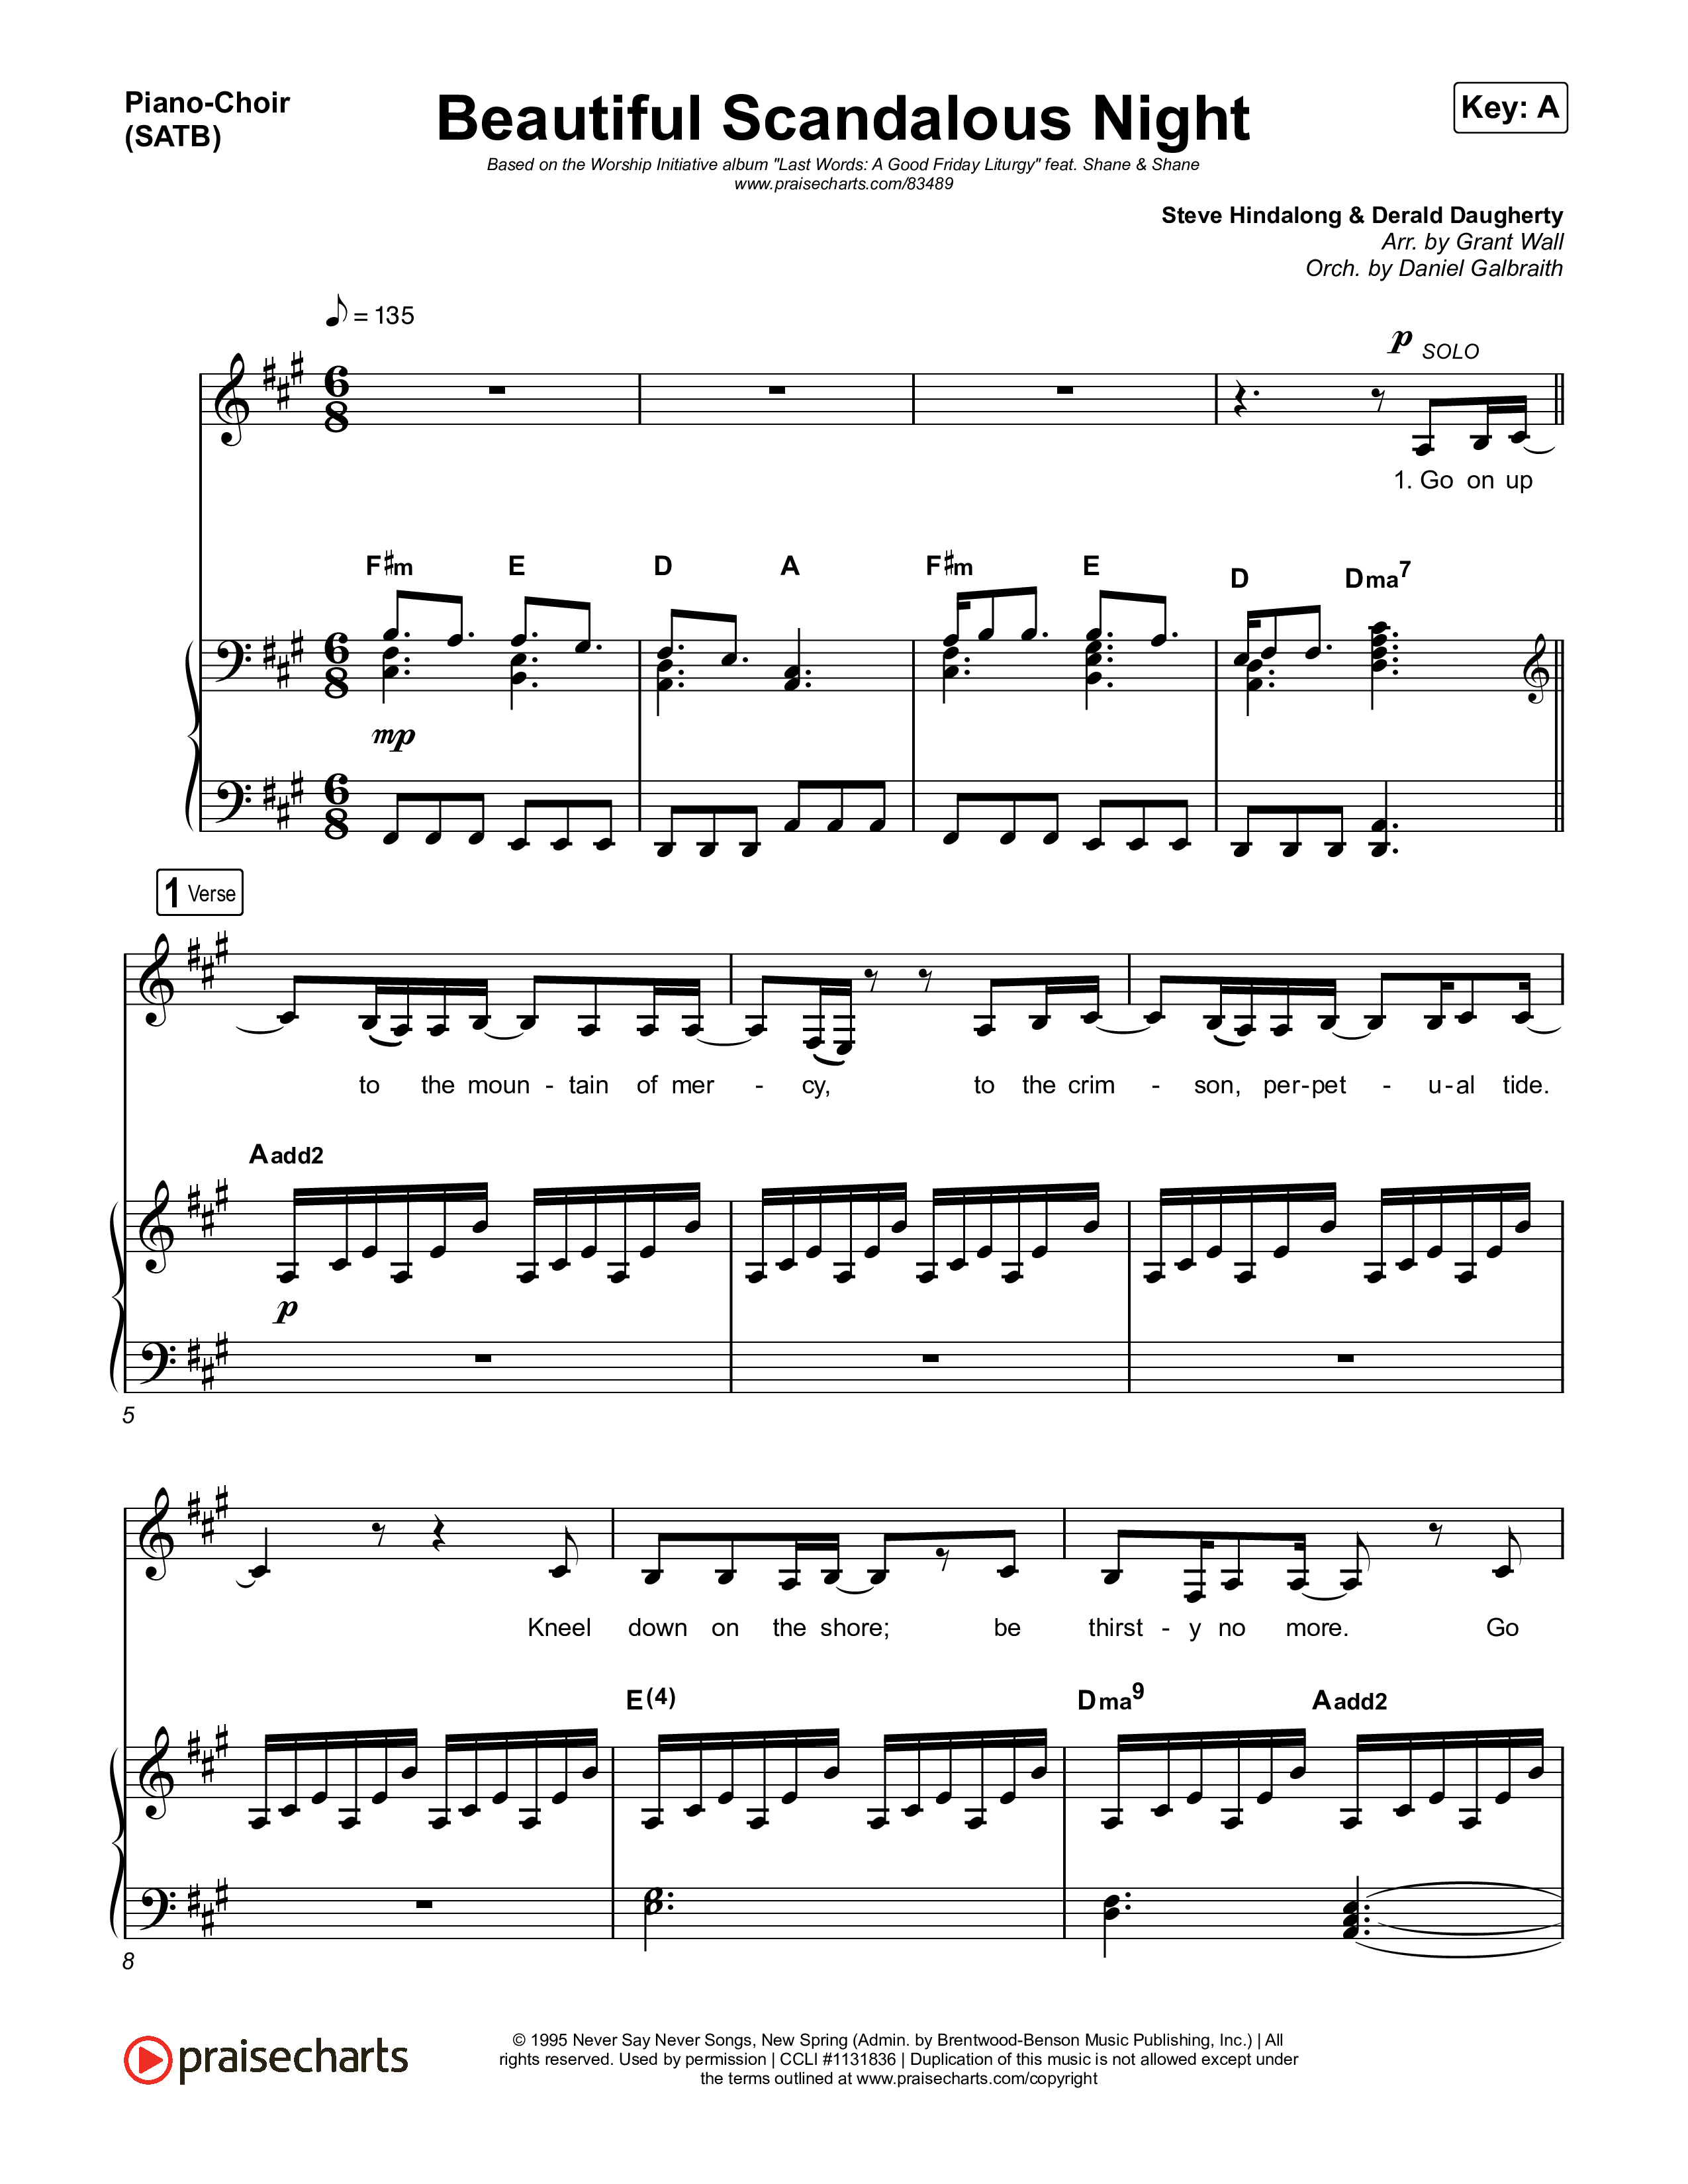 Beautiful Scandalous Night Piano/Vocal (SATB) (Shane & Shane / The Worship Initiative)